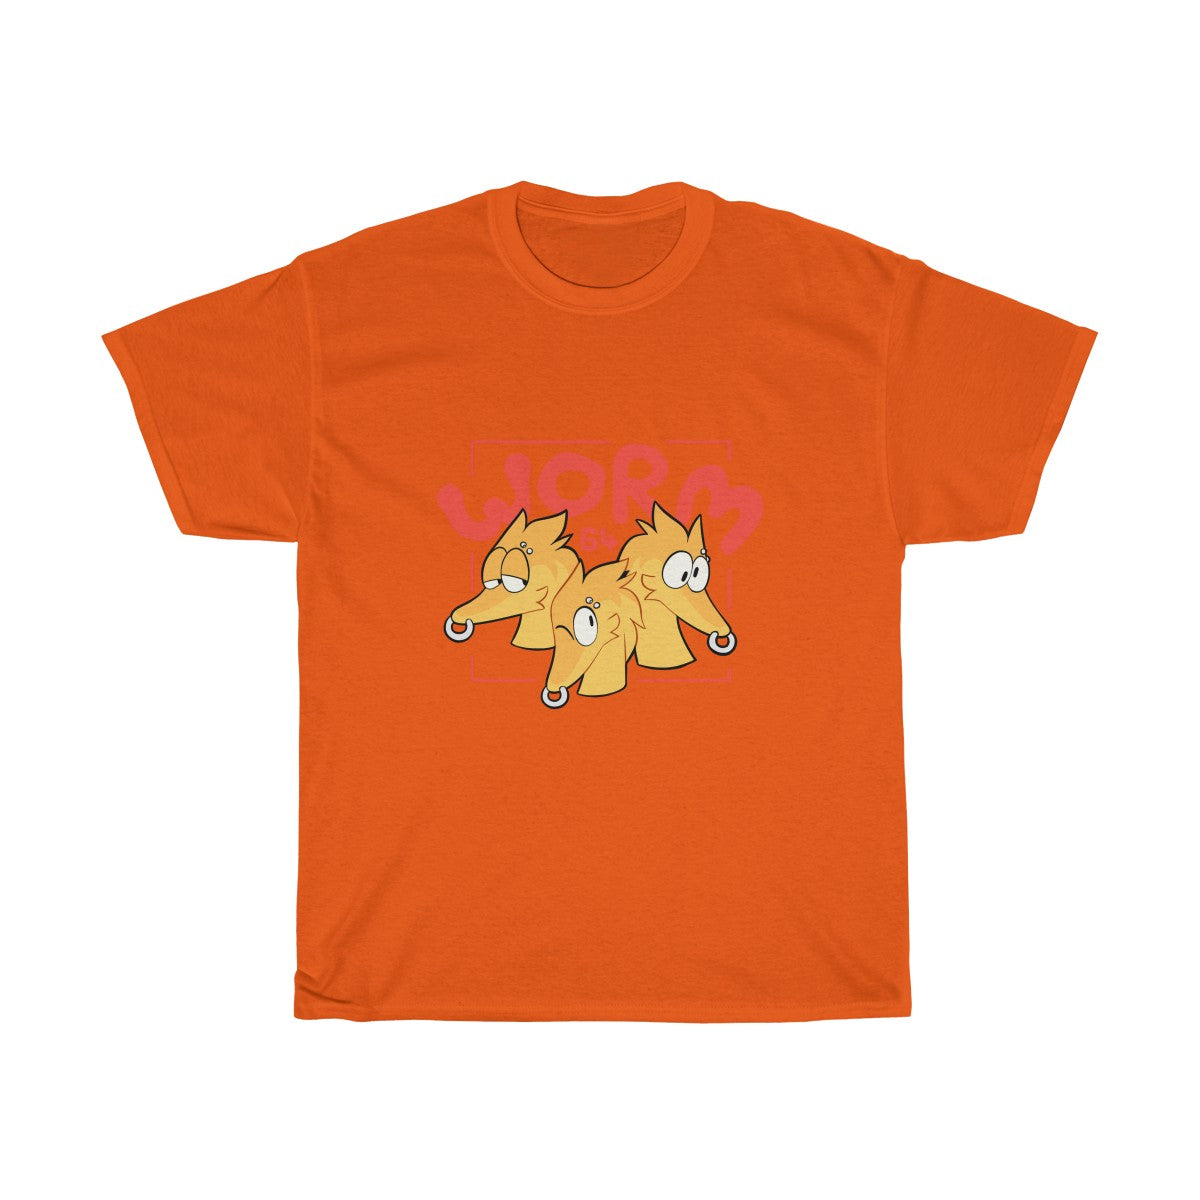 Worm 64 - T-Shirt T-Shirt Motfal Orange S 